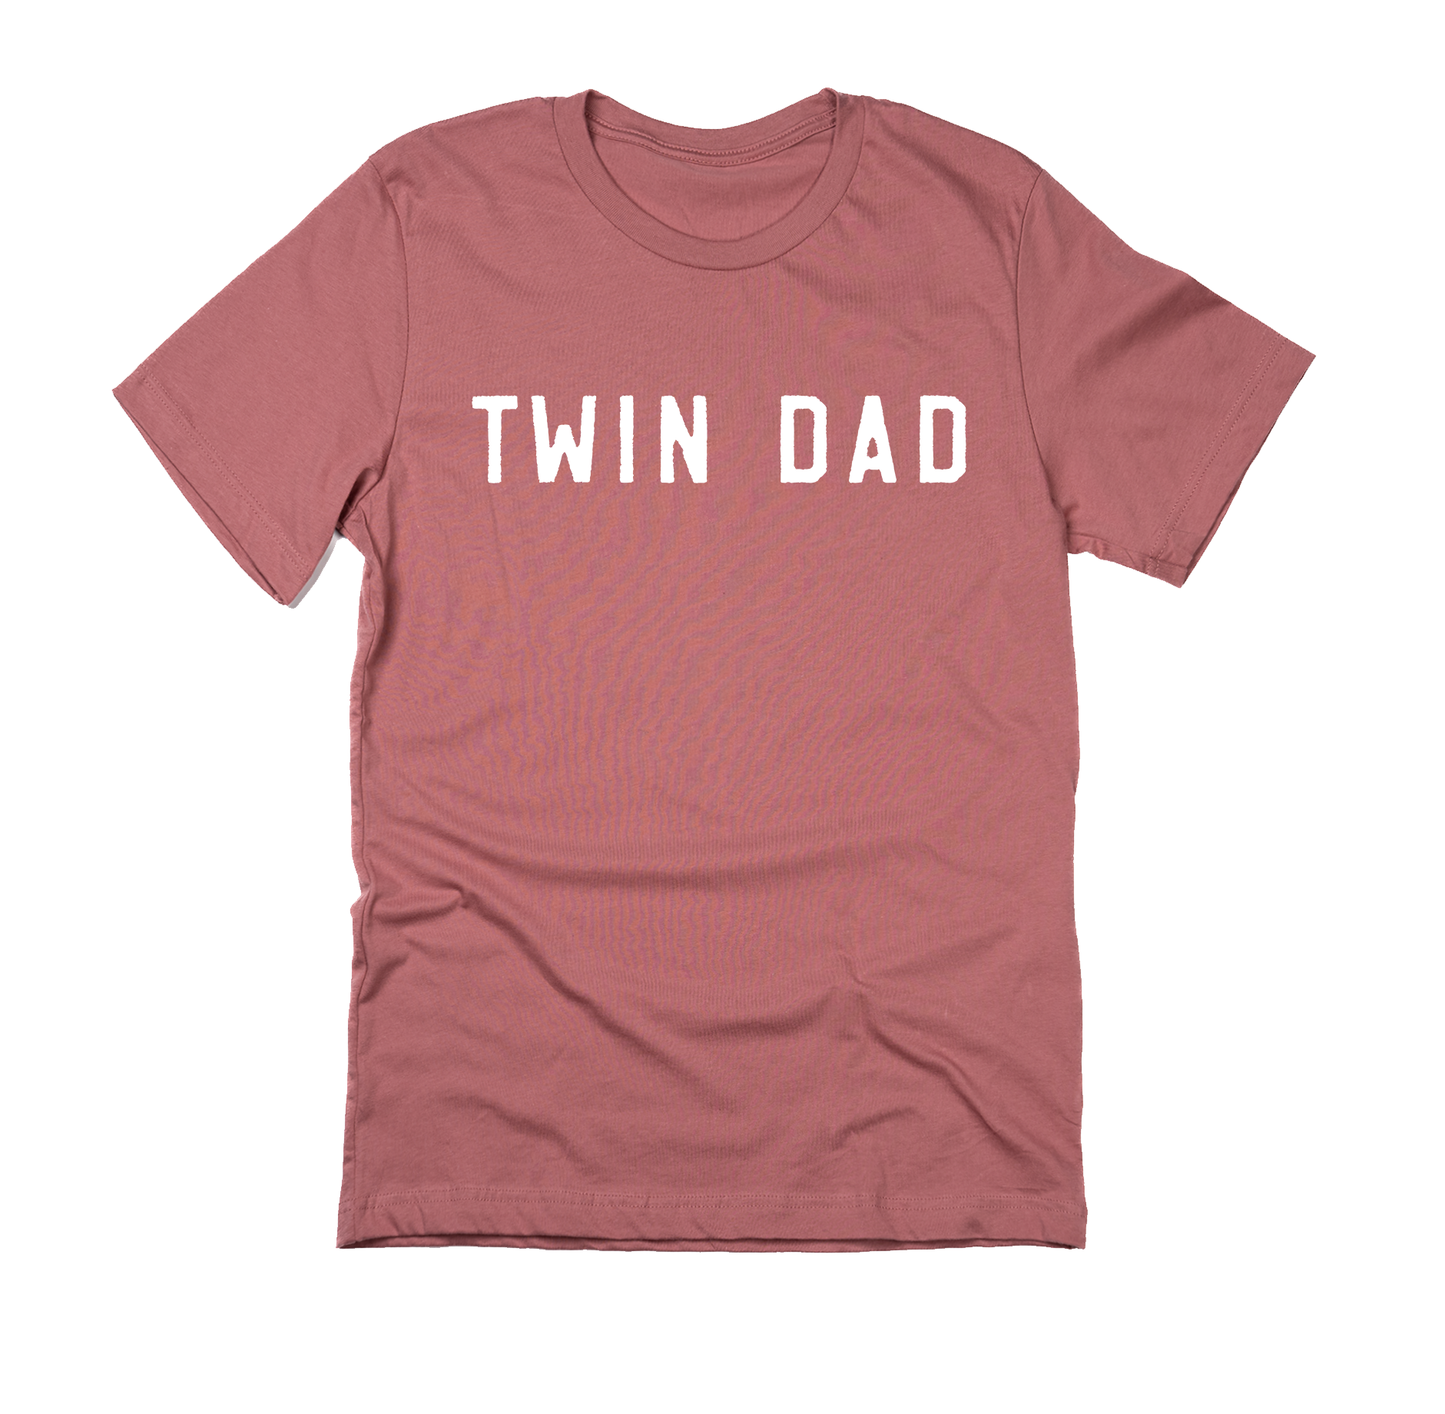 Twin Dad (White) - Tee (Mauve)